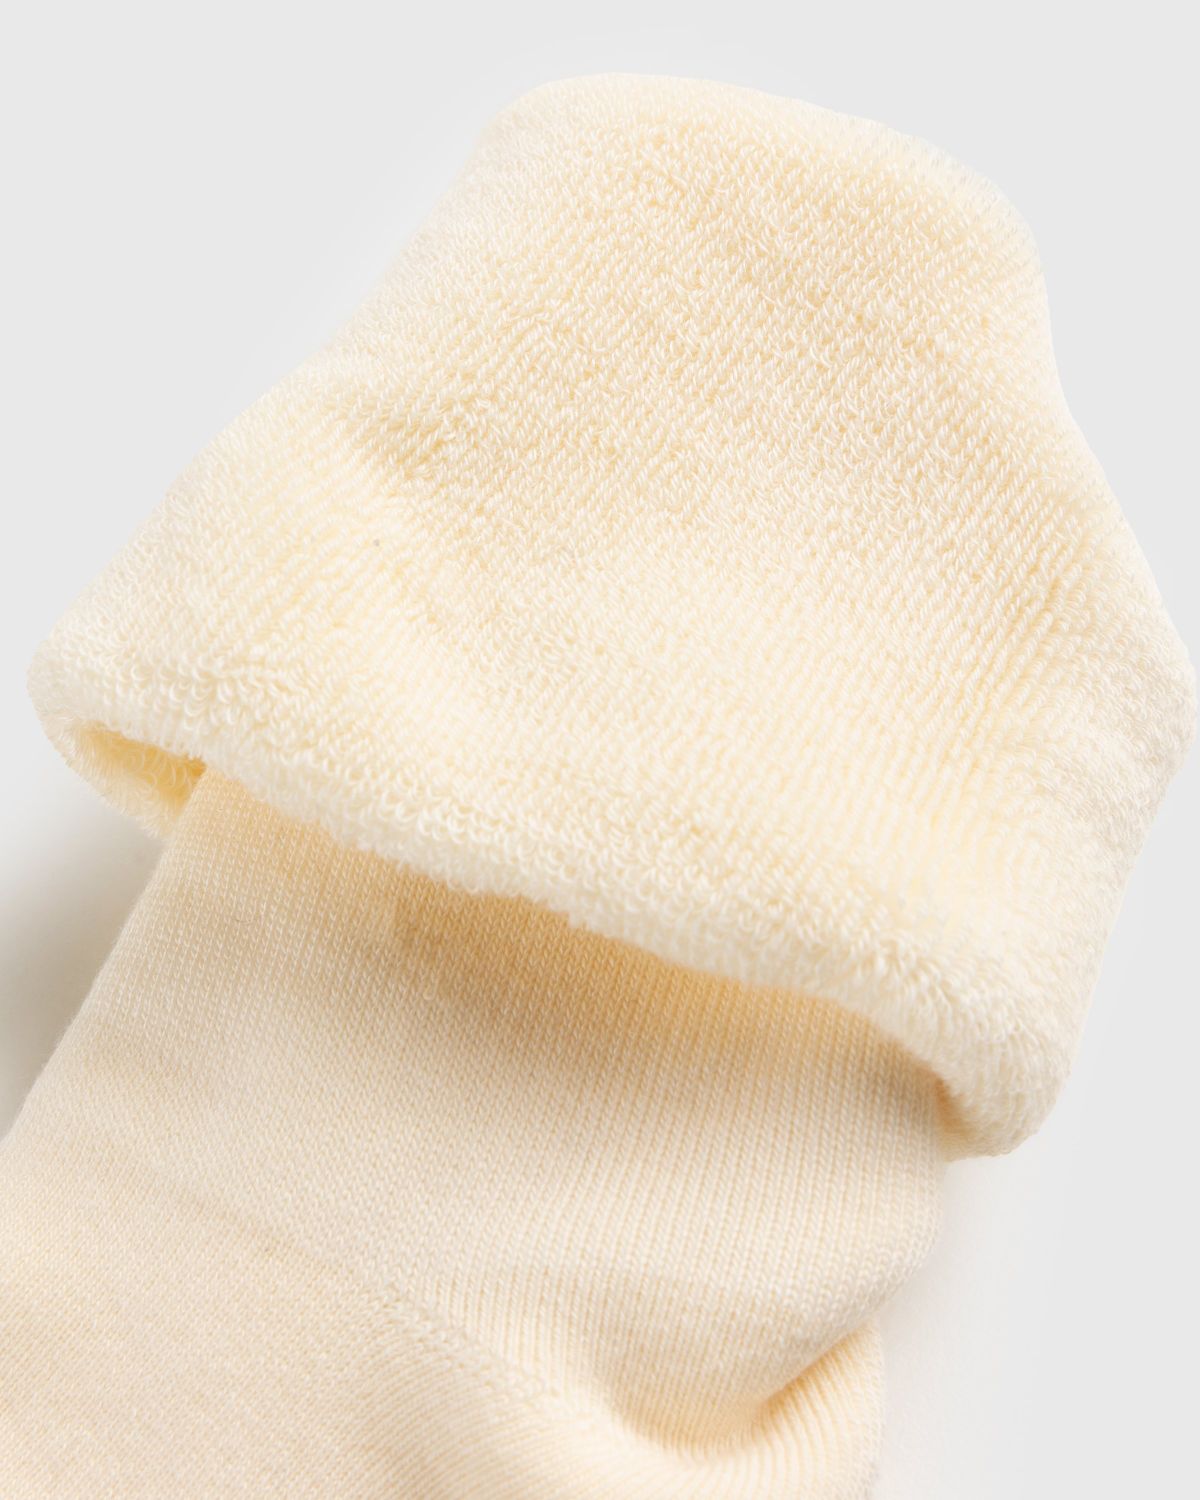 Kenzo – Socks Off White - Crew - Beige - Image 3